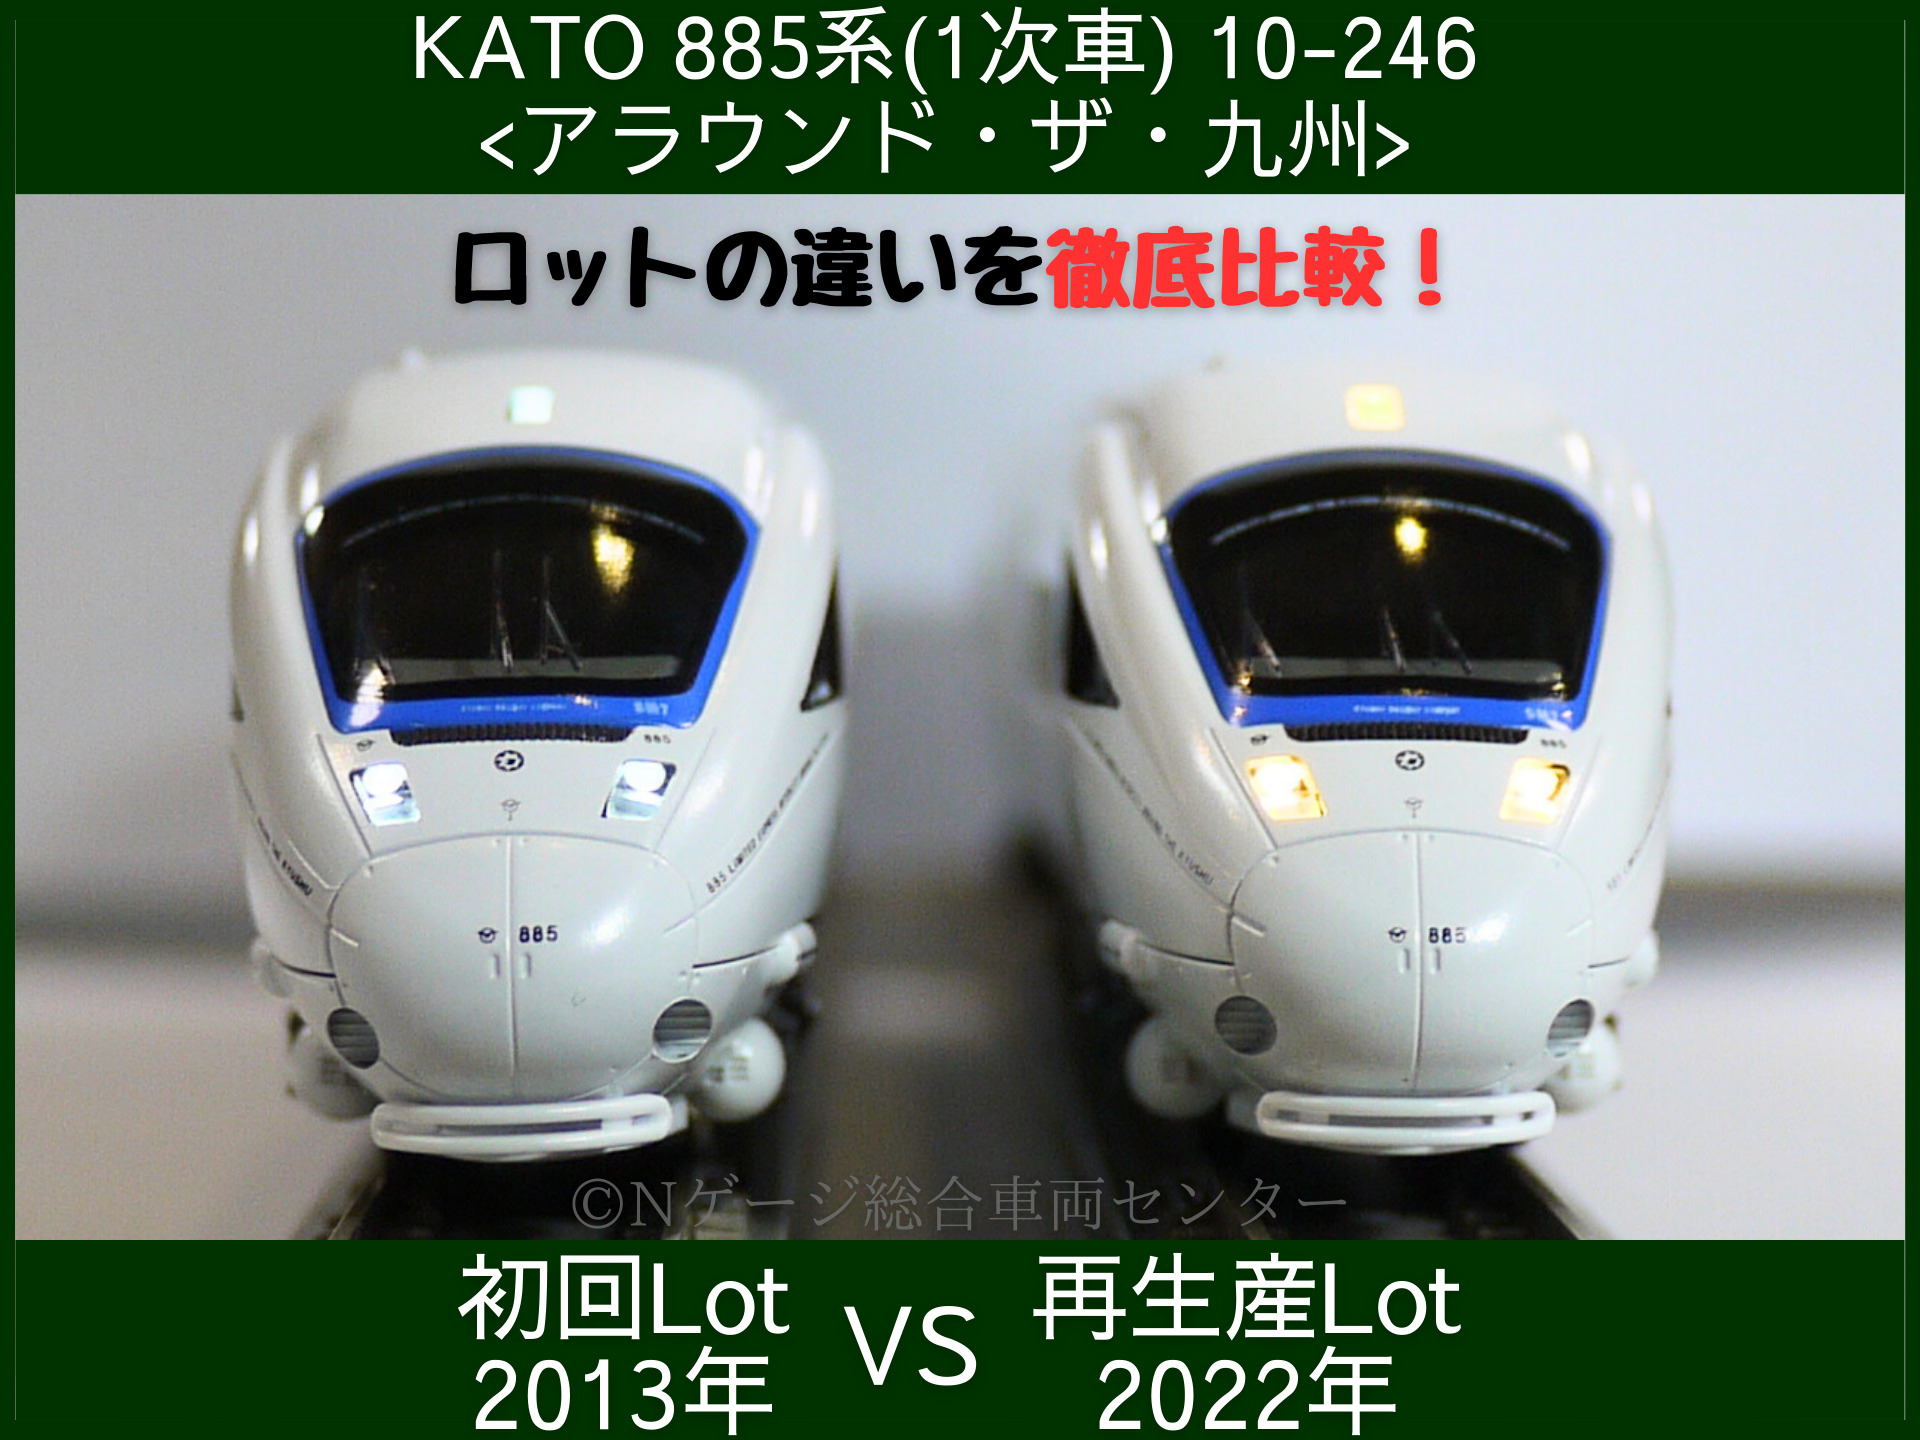 KATO 885系(1次車) アラウンド・ザ・九州新品で購入